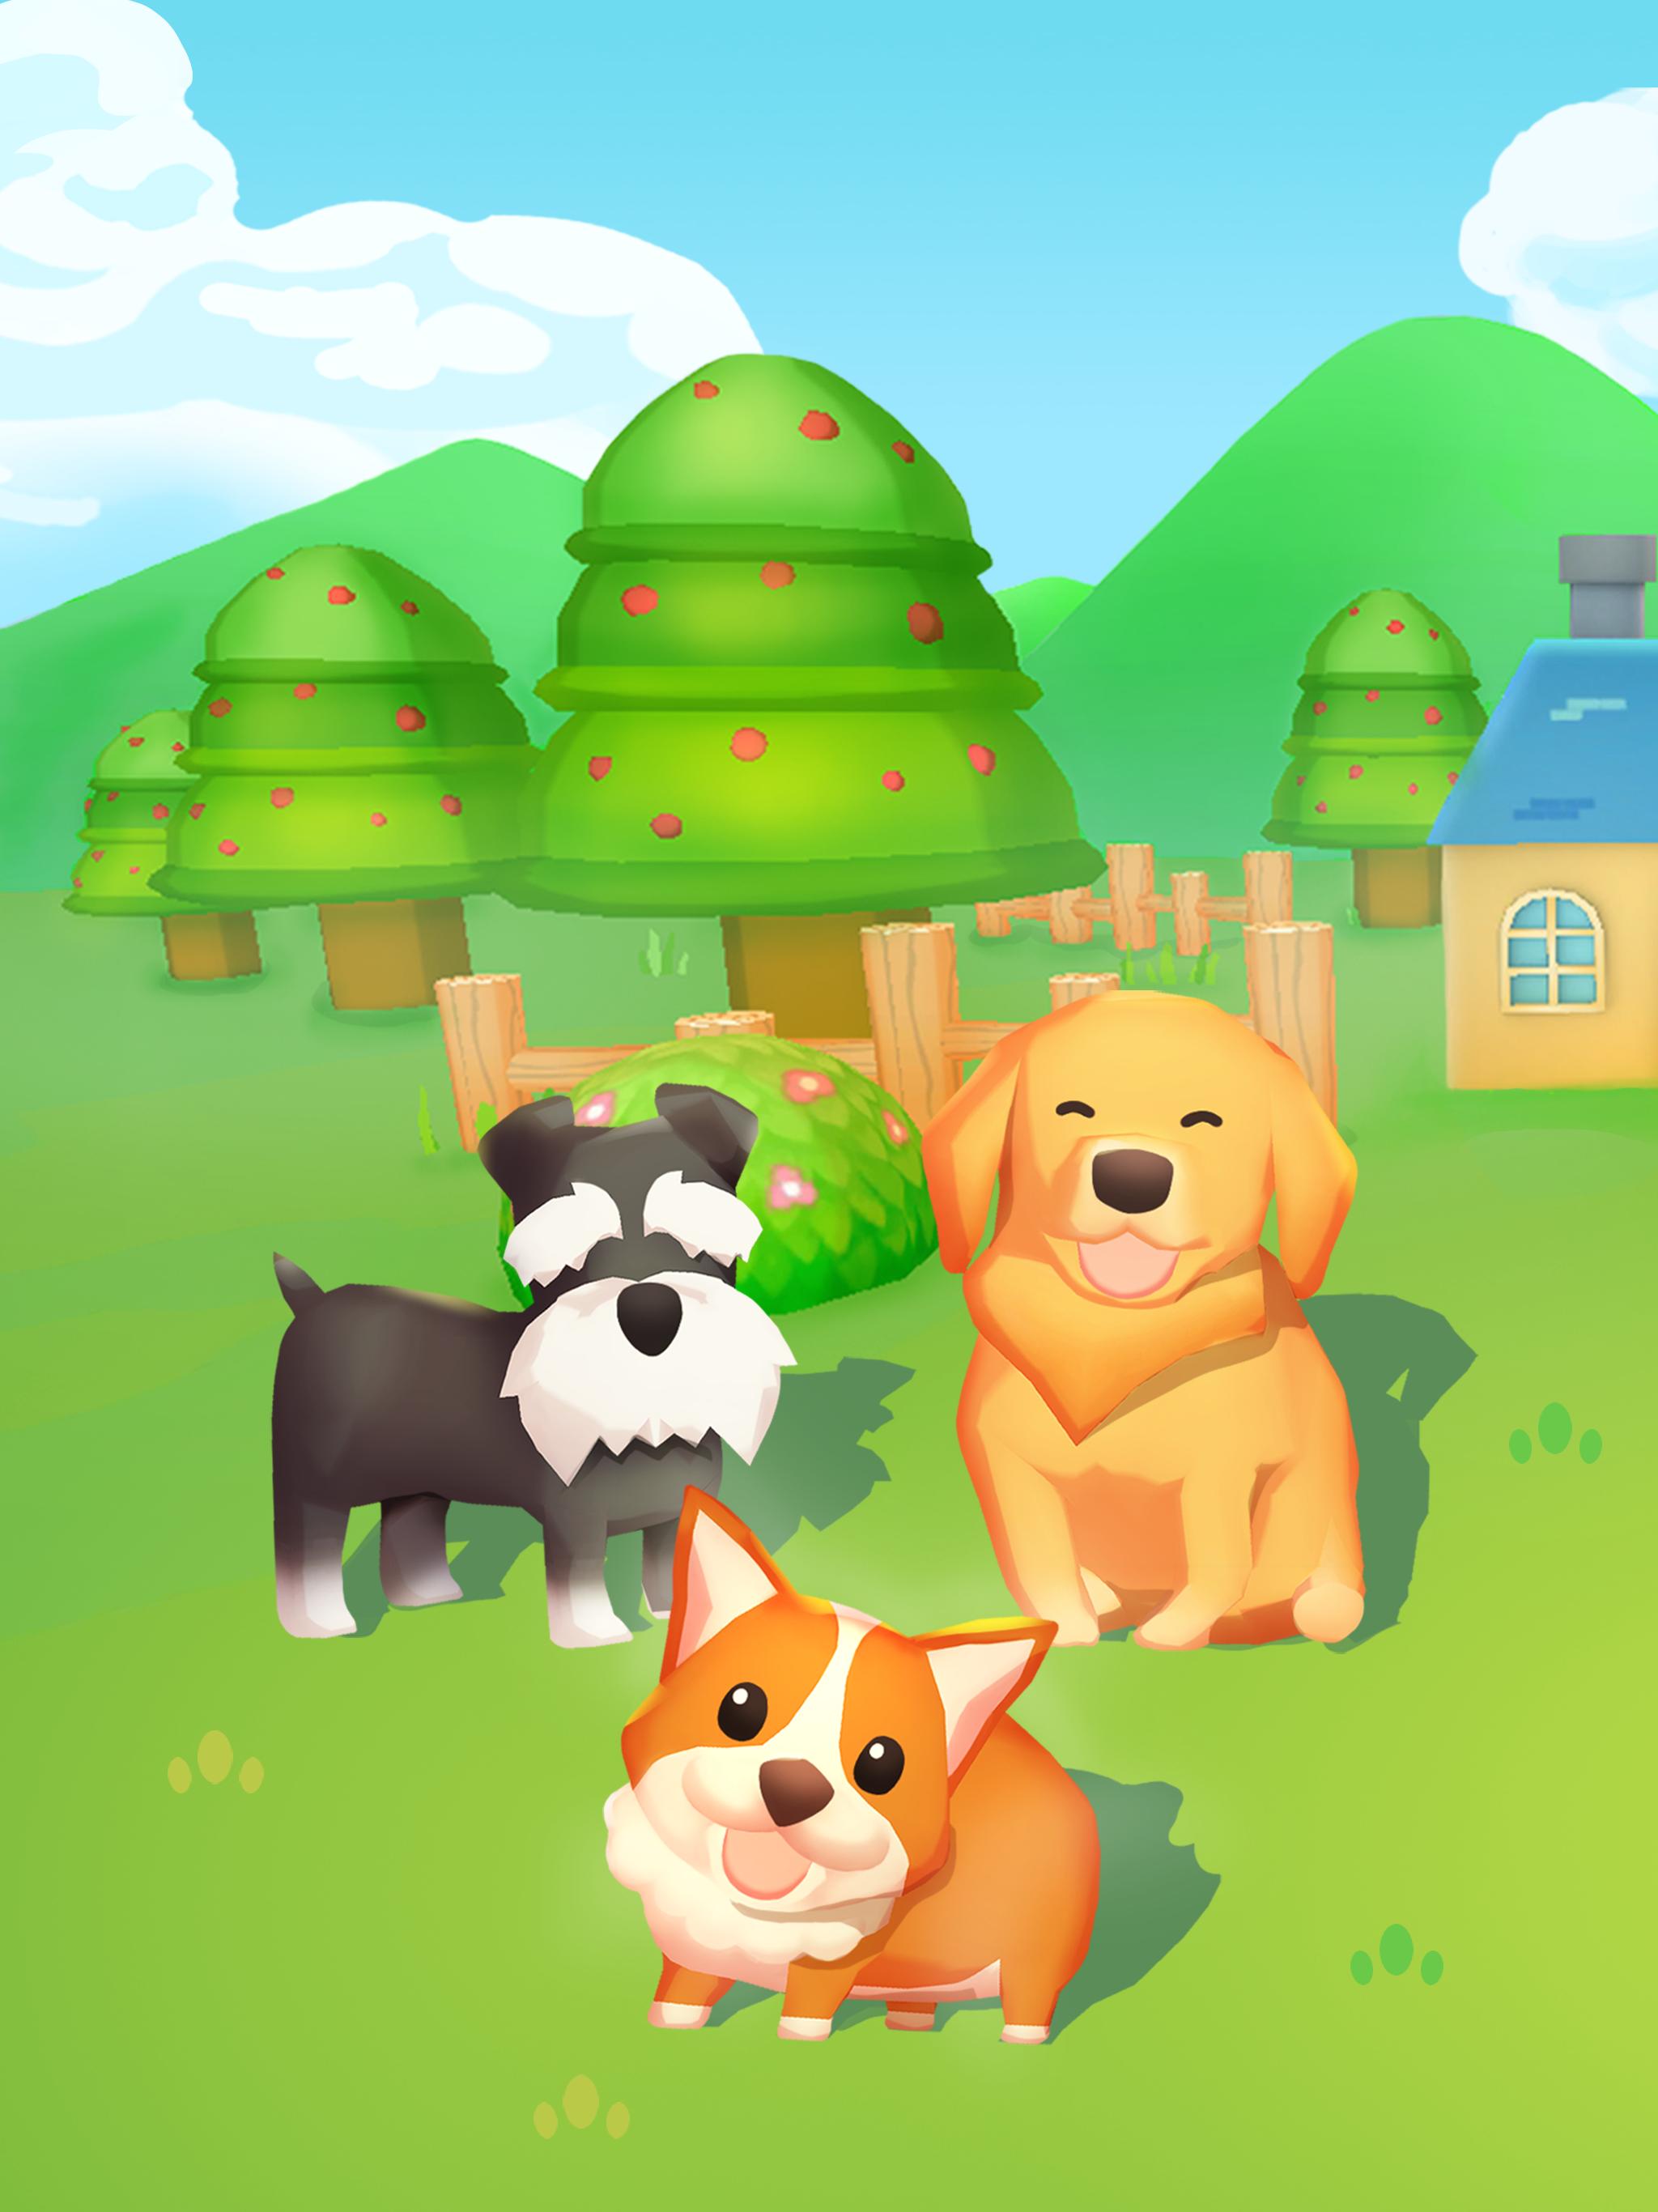 Merge Dogs 3D 1.1 Screenshot 17